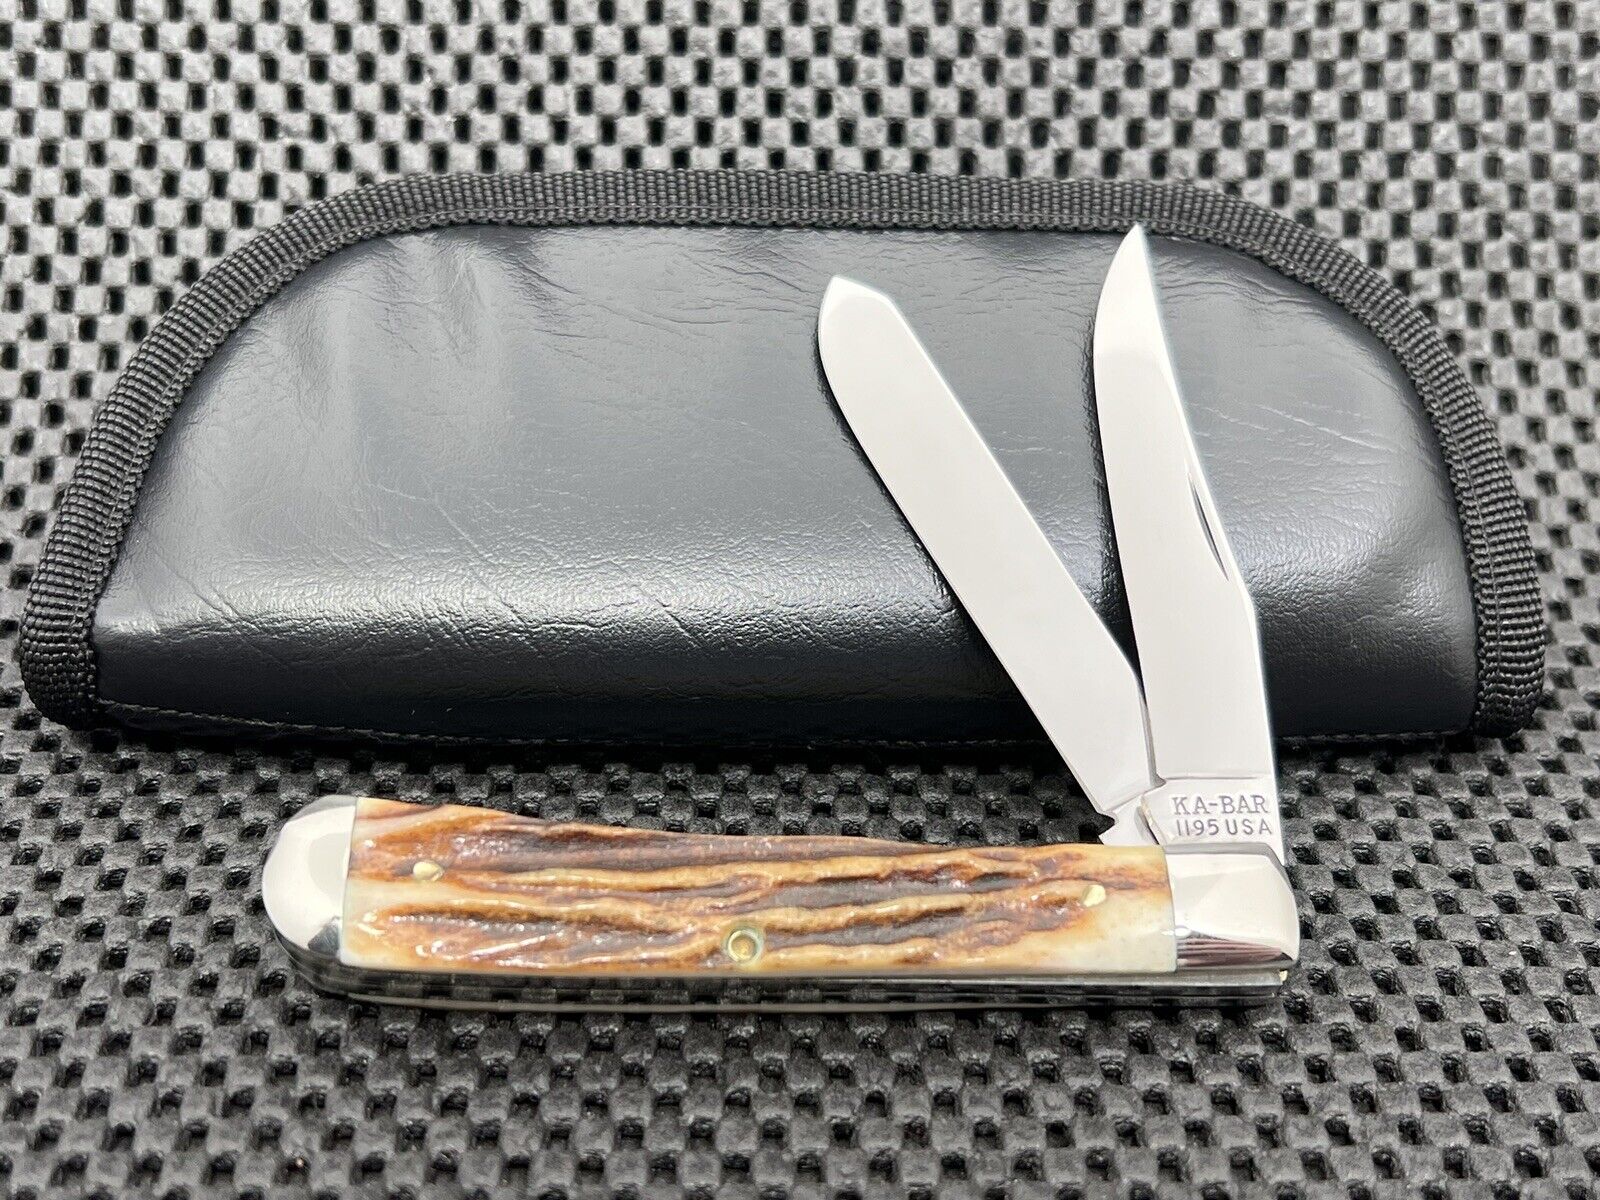 KA-BAR STAG TRAPPER KNIFE